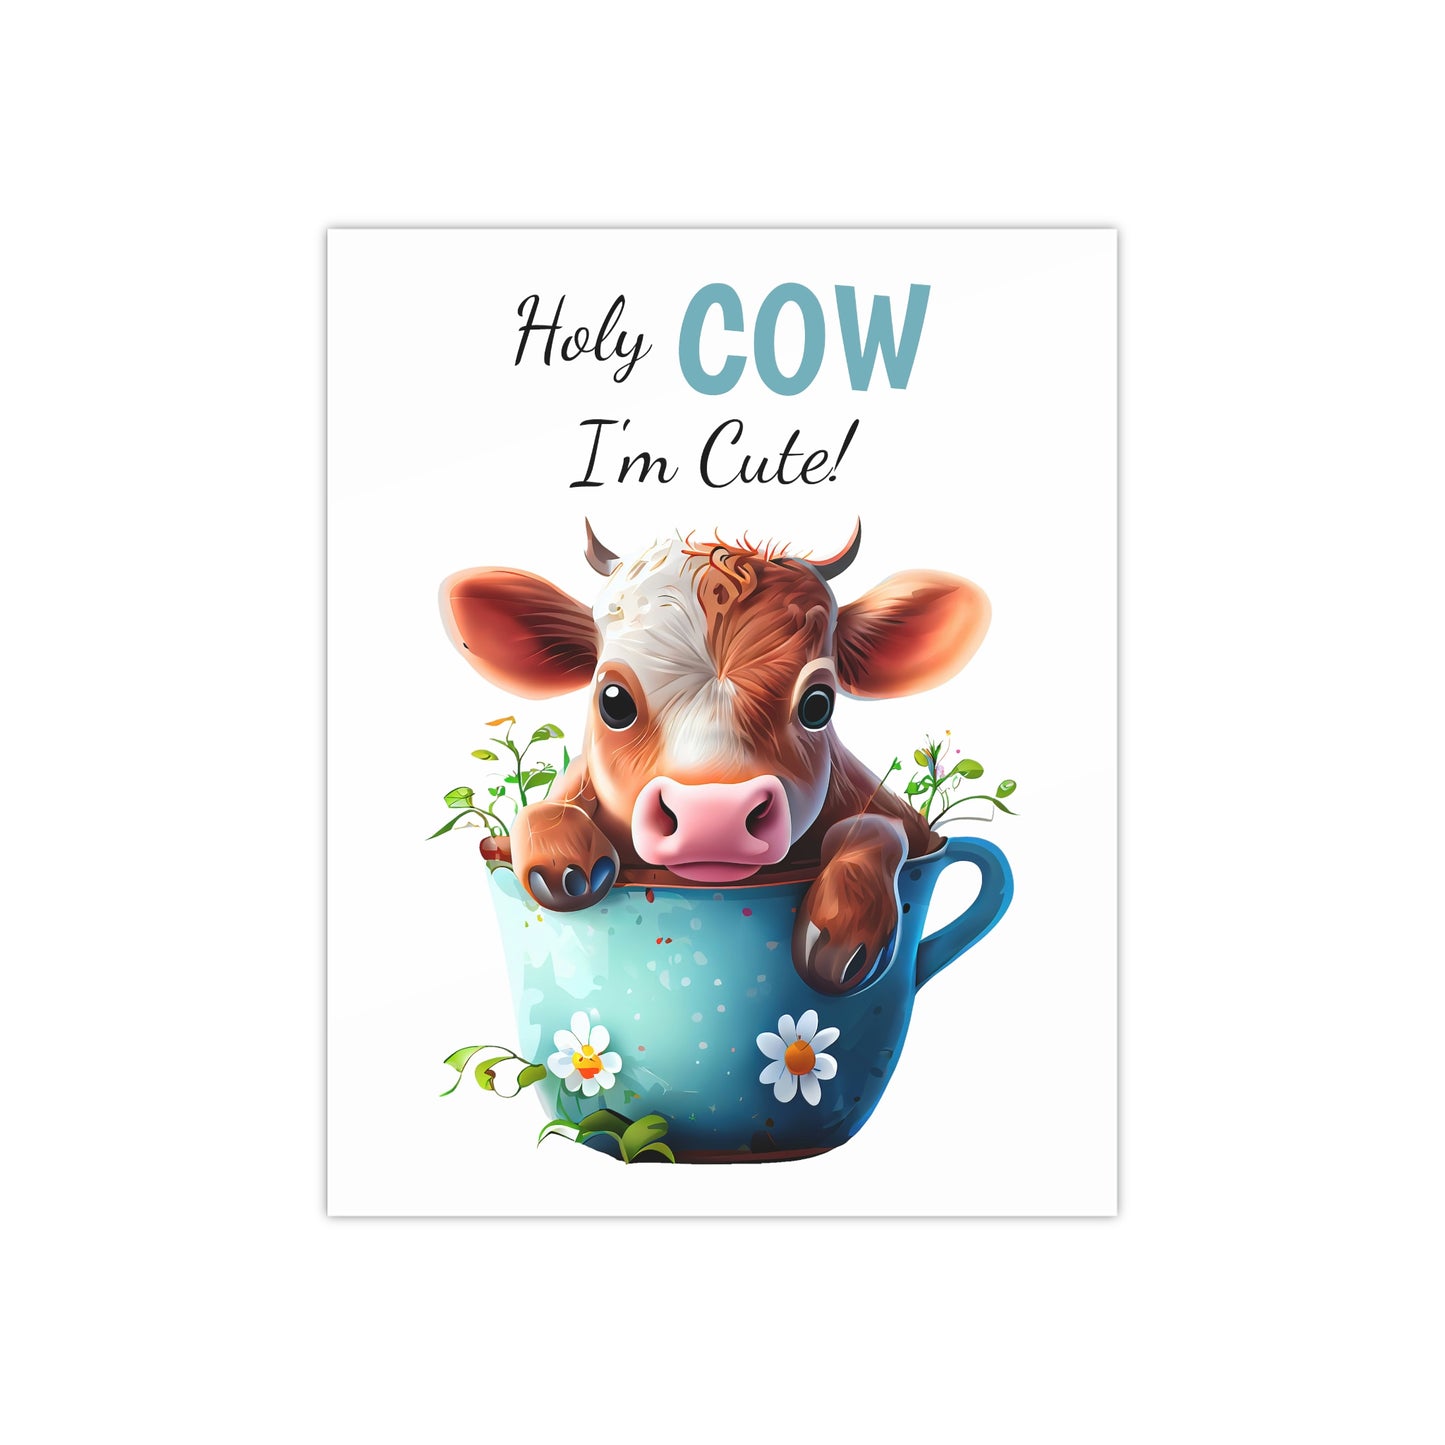 Cow in teacup nursery wall decor, cow nursery poster wall art, holy cow I’m cute nursery quote wall art print